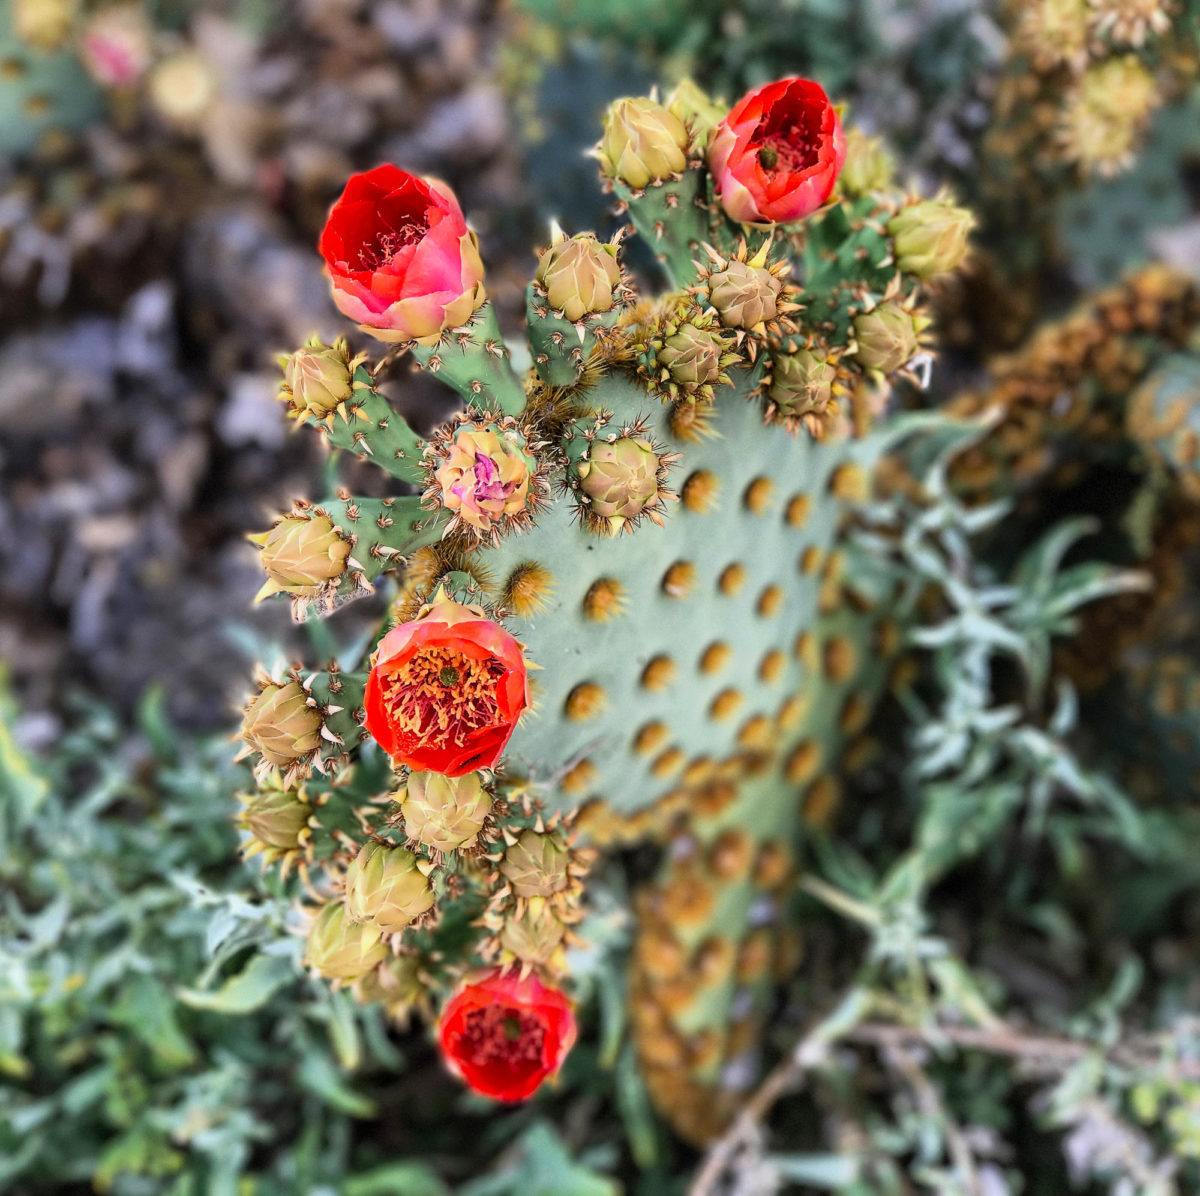 Prickly pear cactus blossoms in Arizona